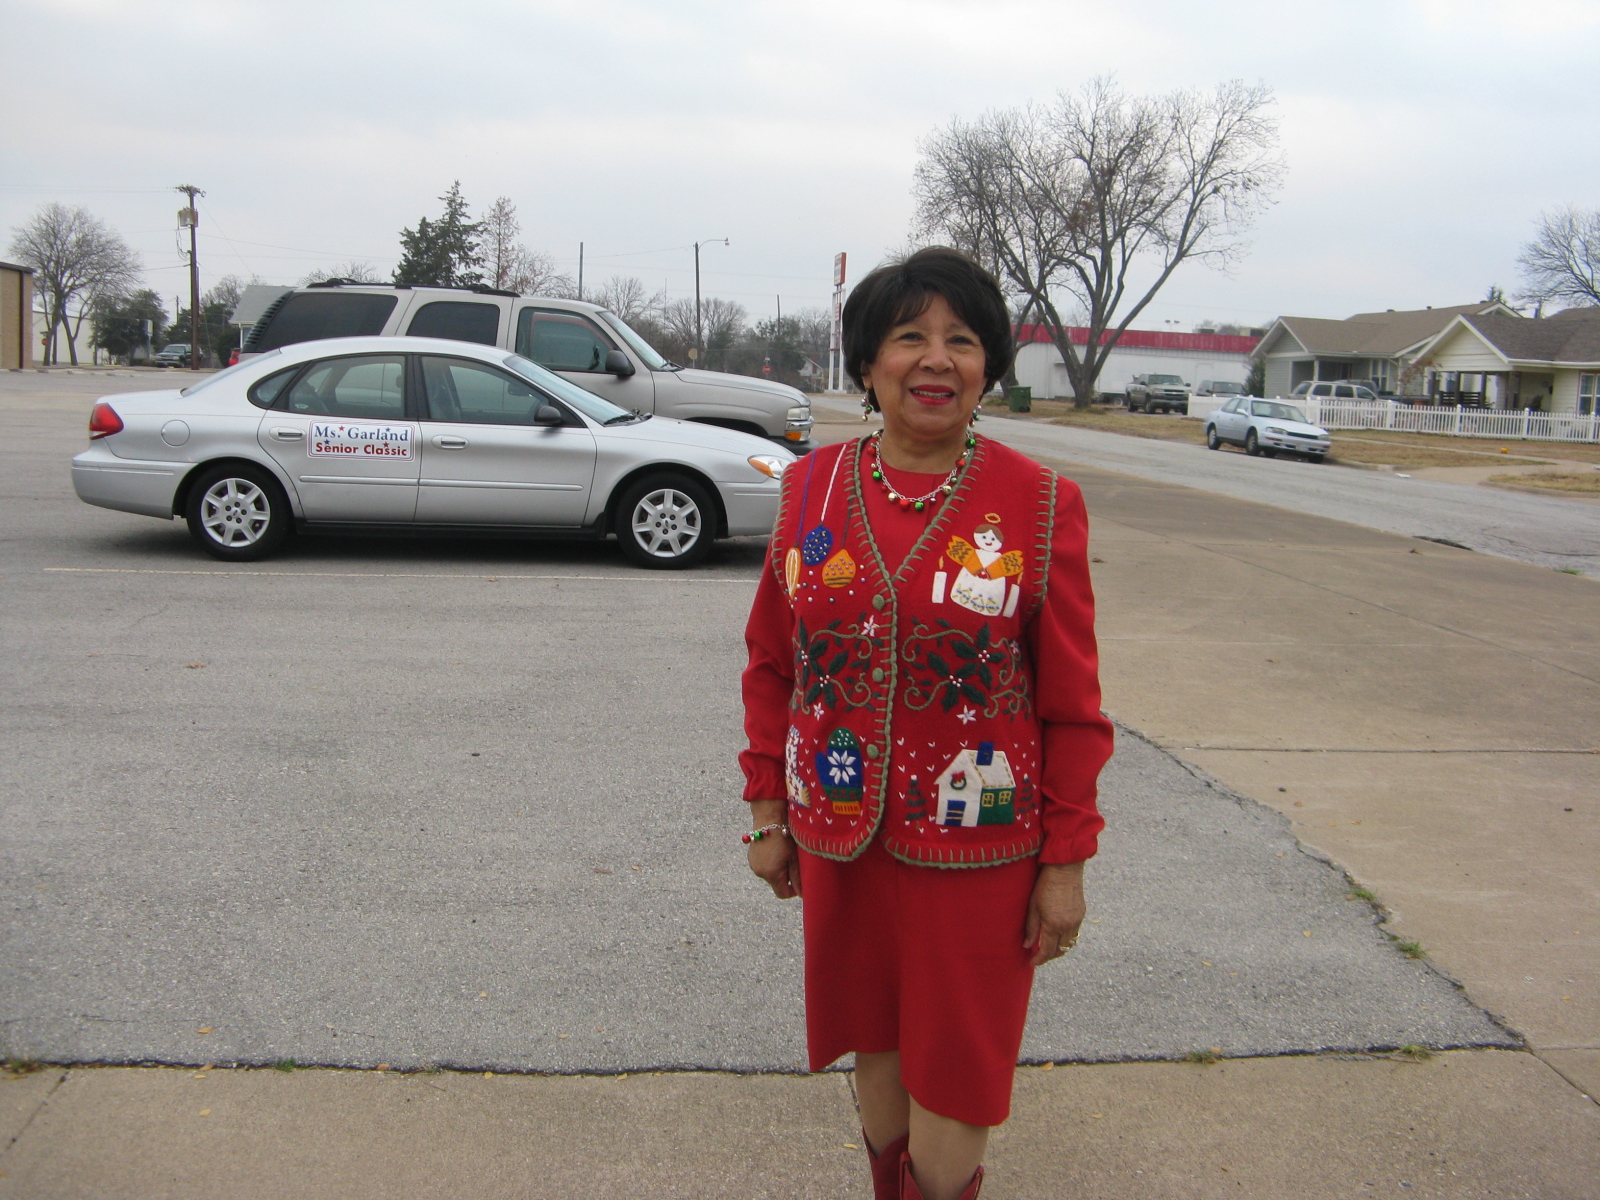 08. Ms. Garland, Senior, 2010